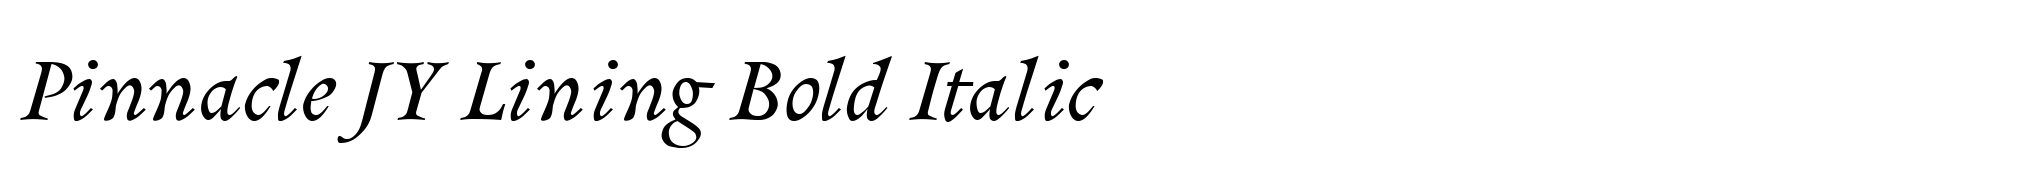 Pinnacle JY Lining Bold Italic image